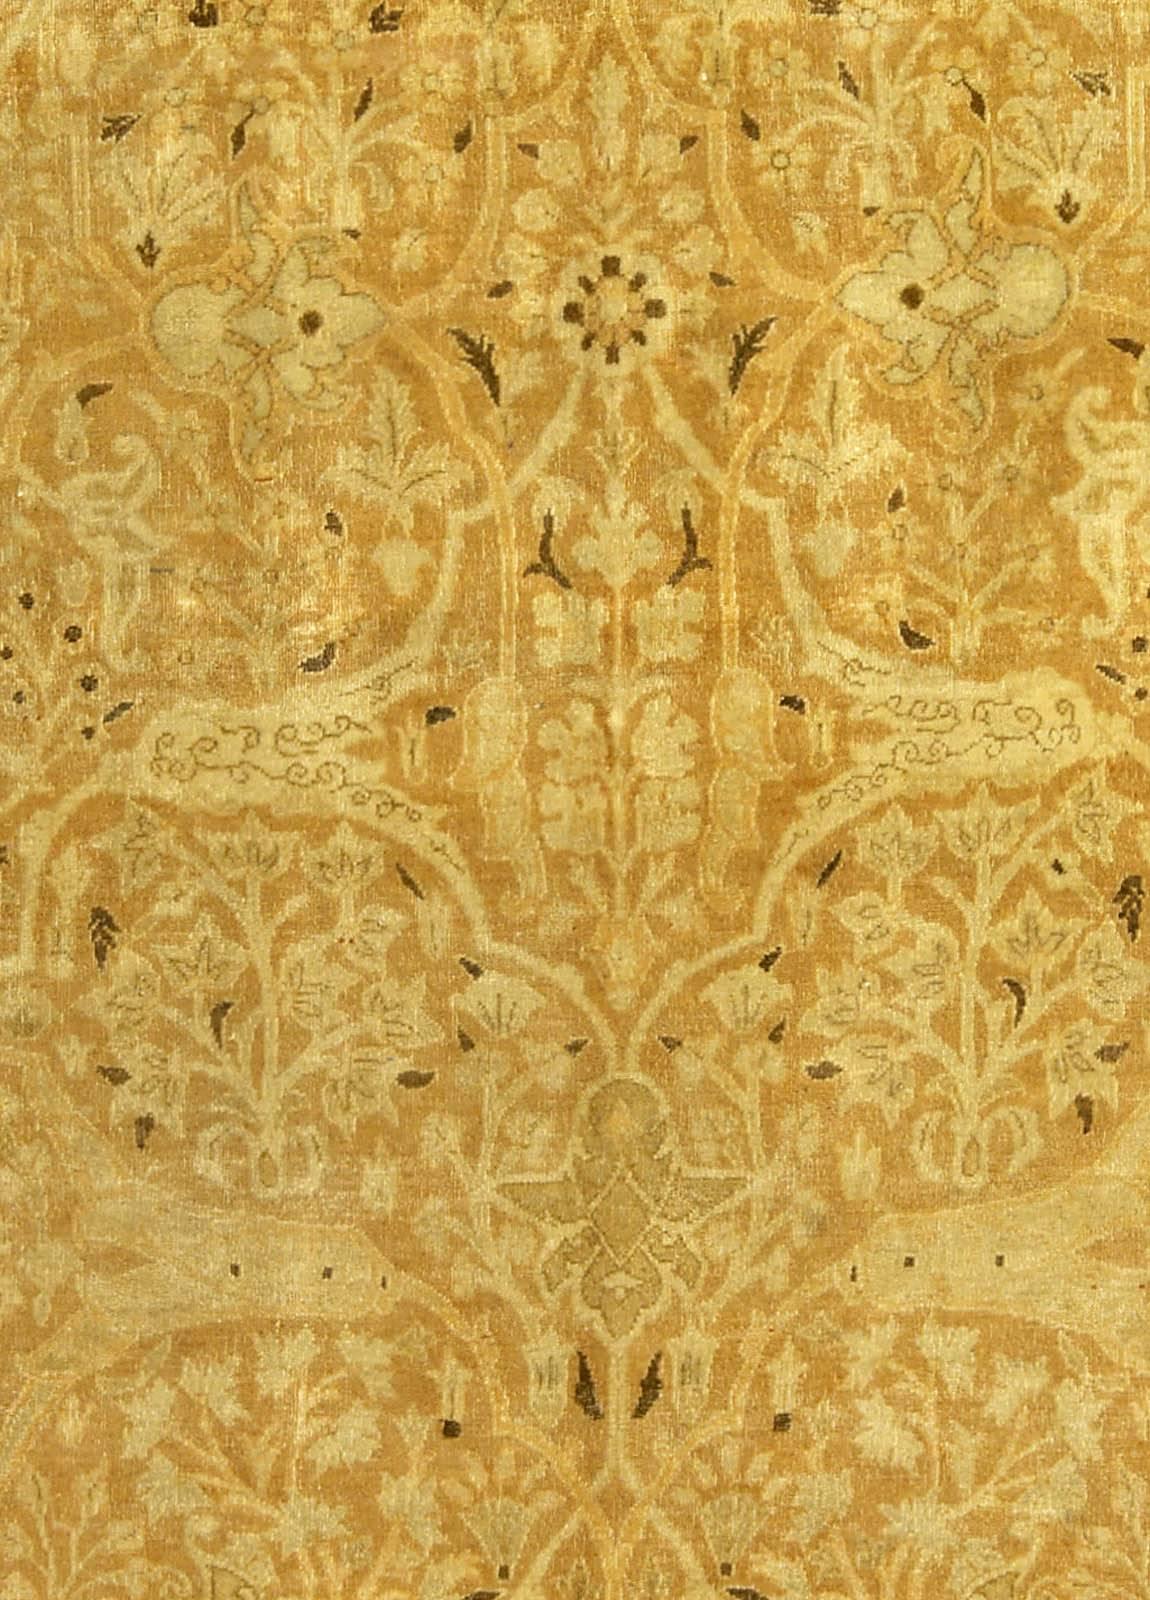 Antique Persian Tabriz botanic yellow handwoven wool rug
Size: 8'0